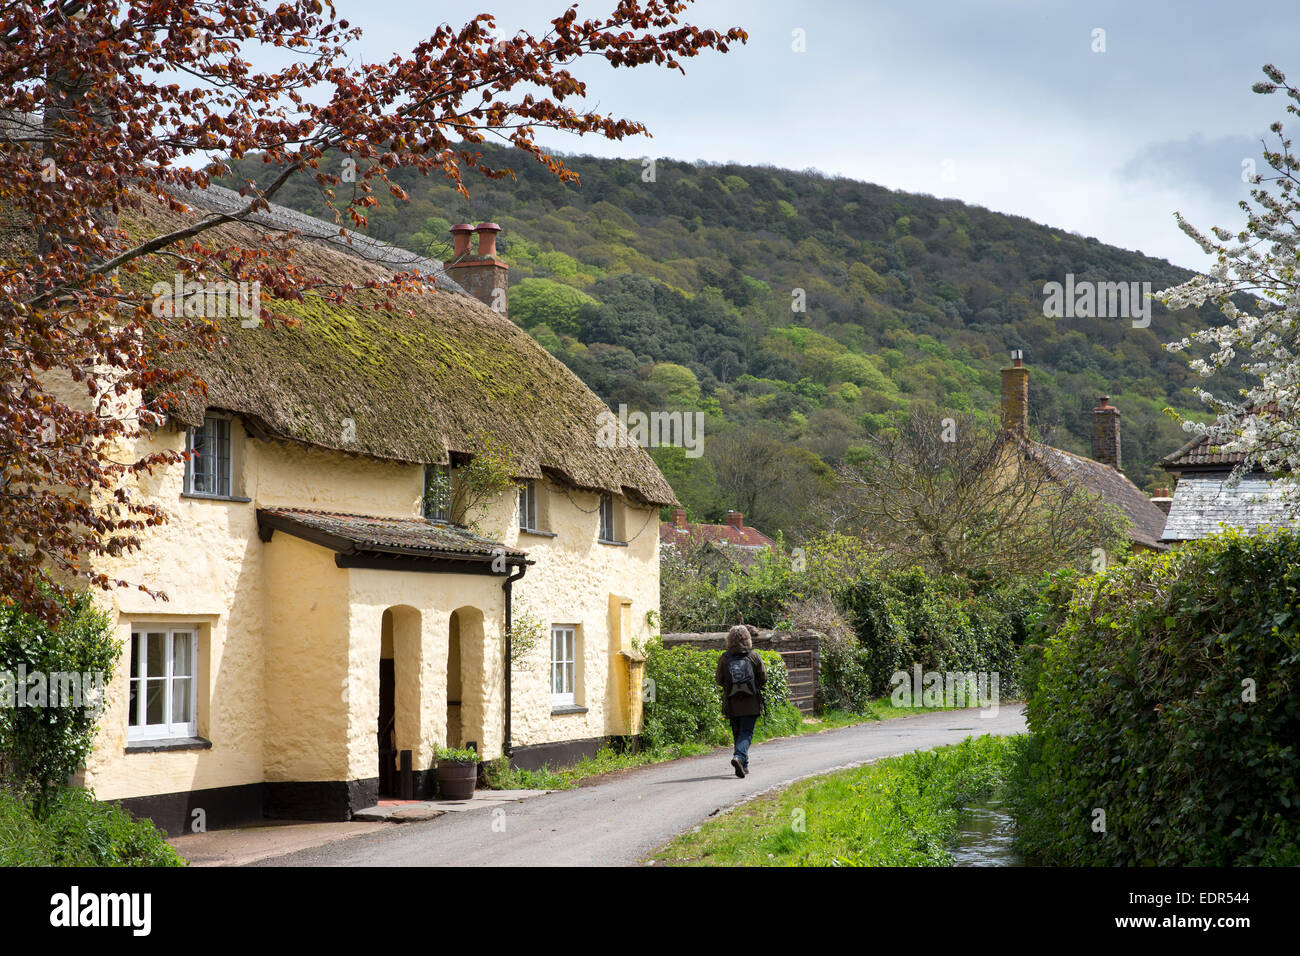 Lone walker passe village pittoresque traditionnel thatched cottage dans Bossington dans Exmoor, Somerset, Royaume-Uni Banque D'Images